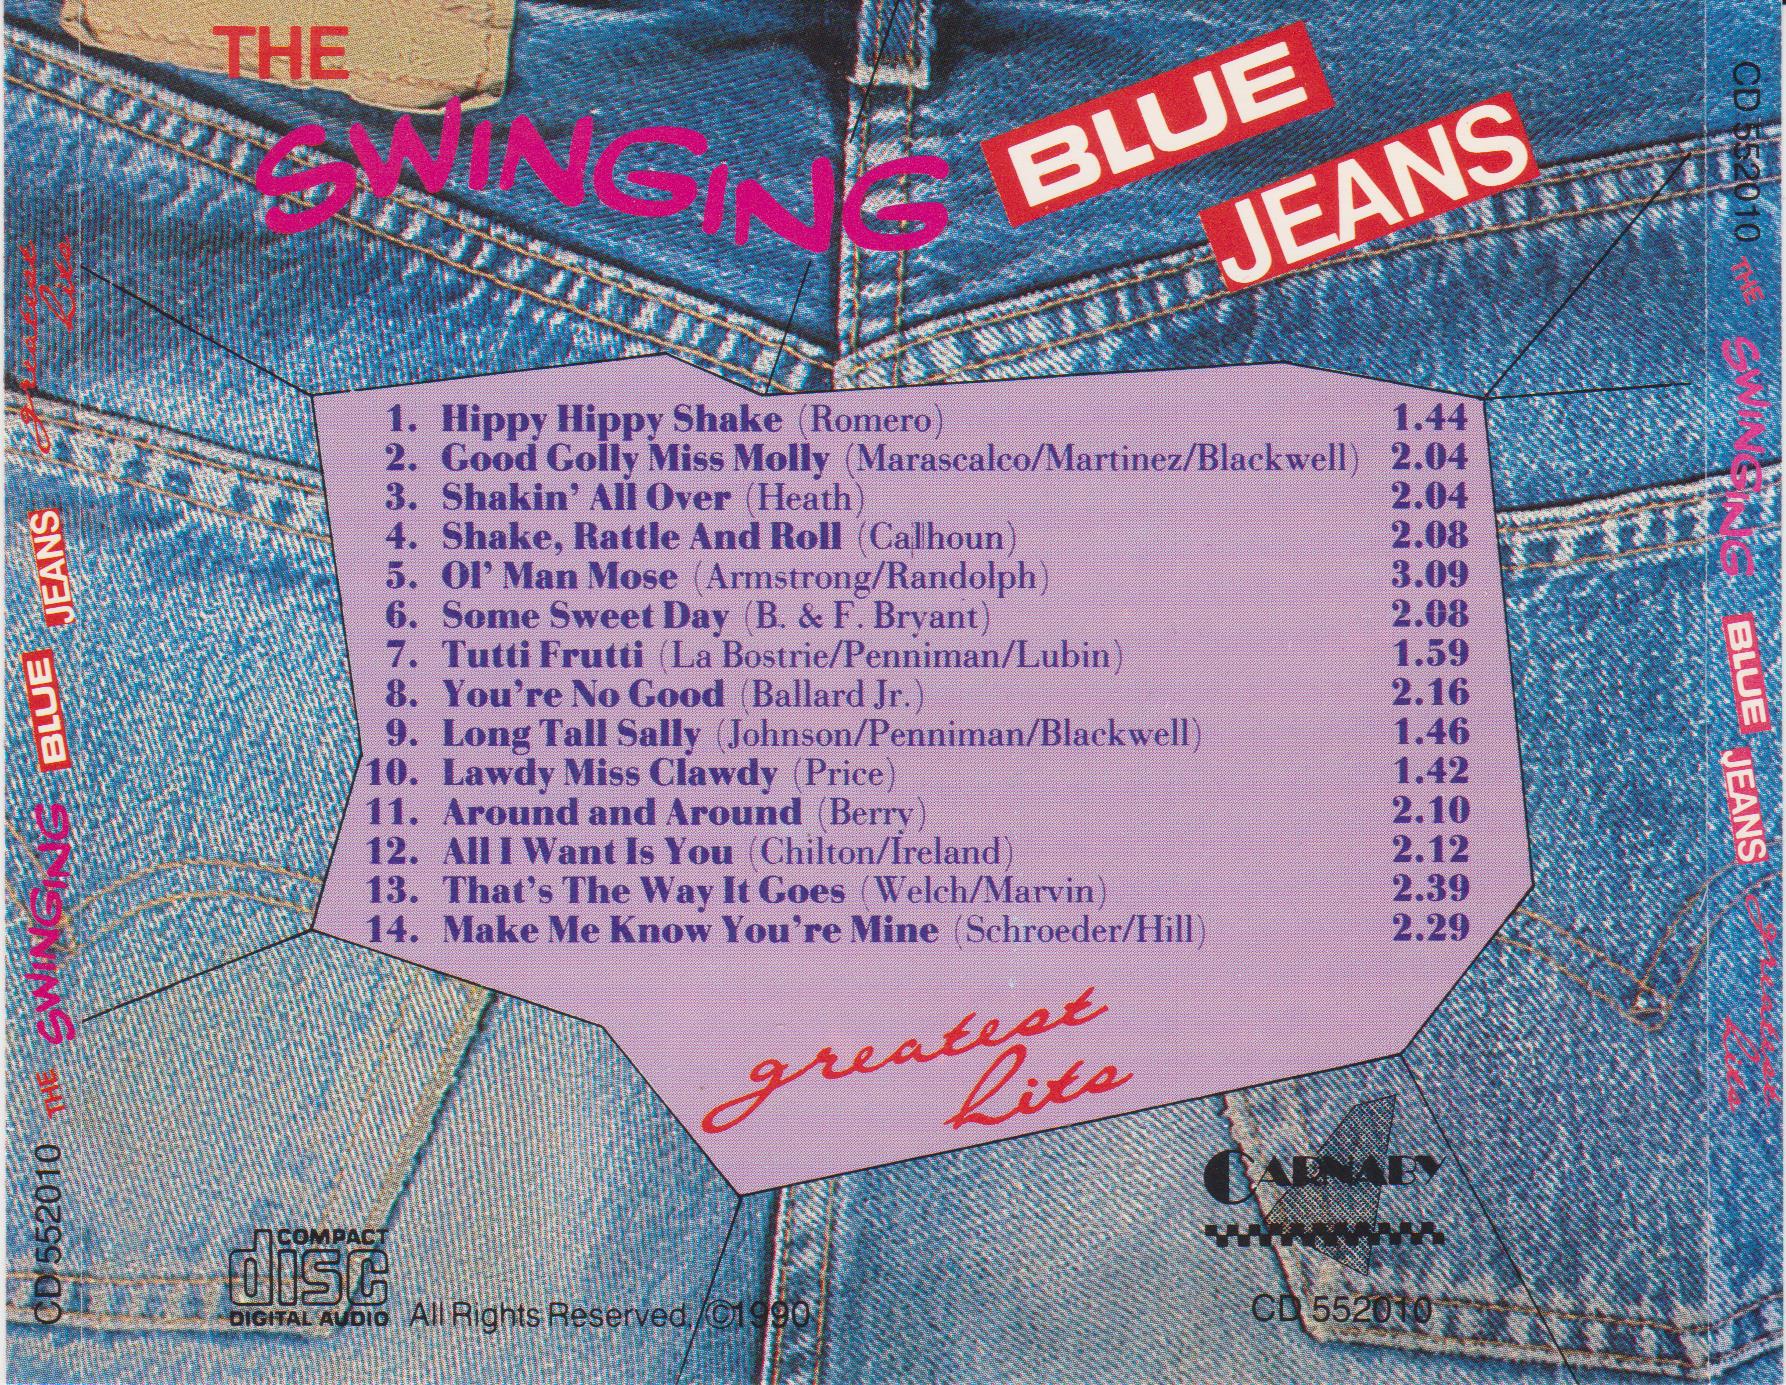 New jeans альбом. Альбом Нью джинс. Альбом Нью джинсы. New Jeans обложка альбома. Название альбомов Нью джинс.